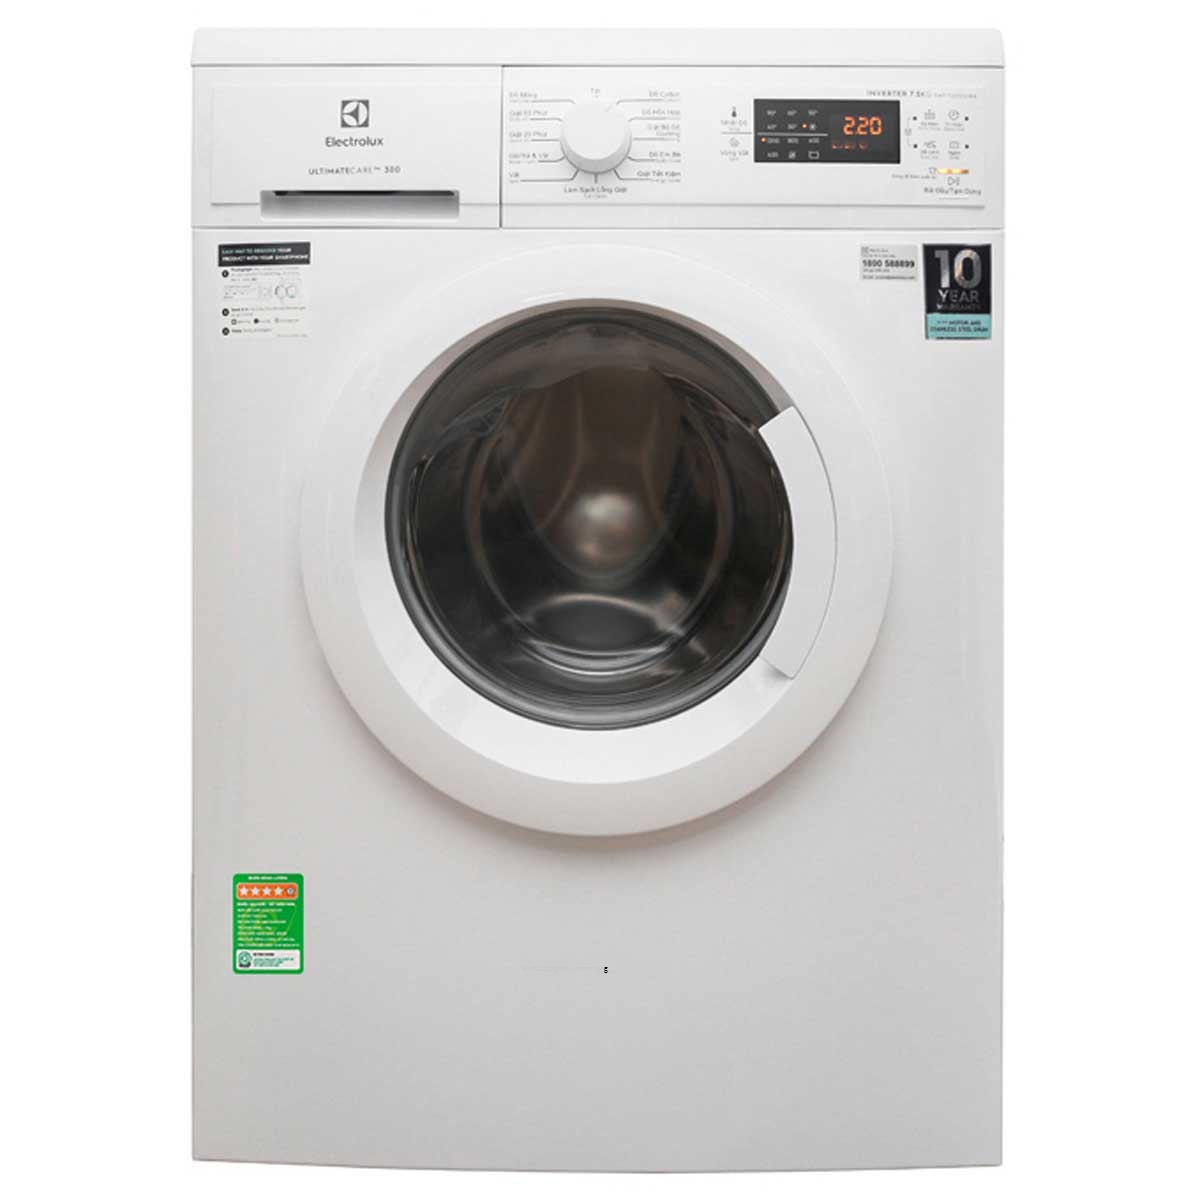 Máy giặt electrolux ewf8025dgwa 